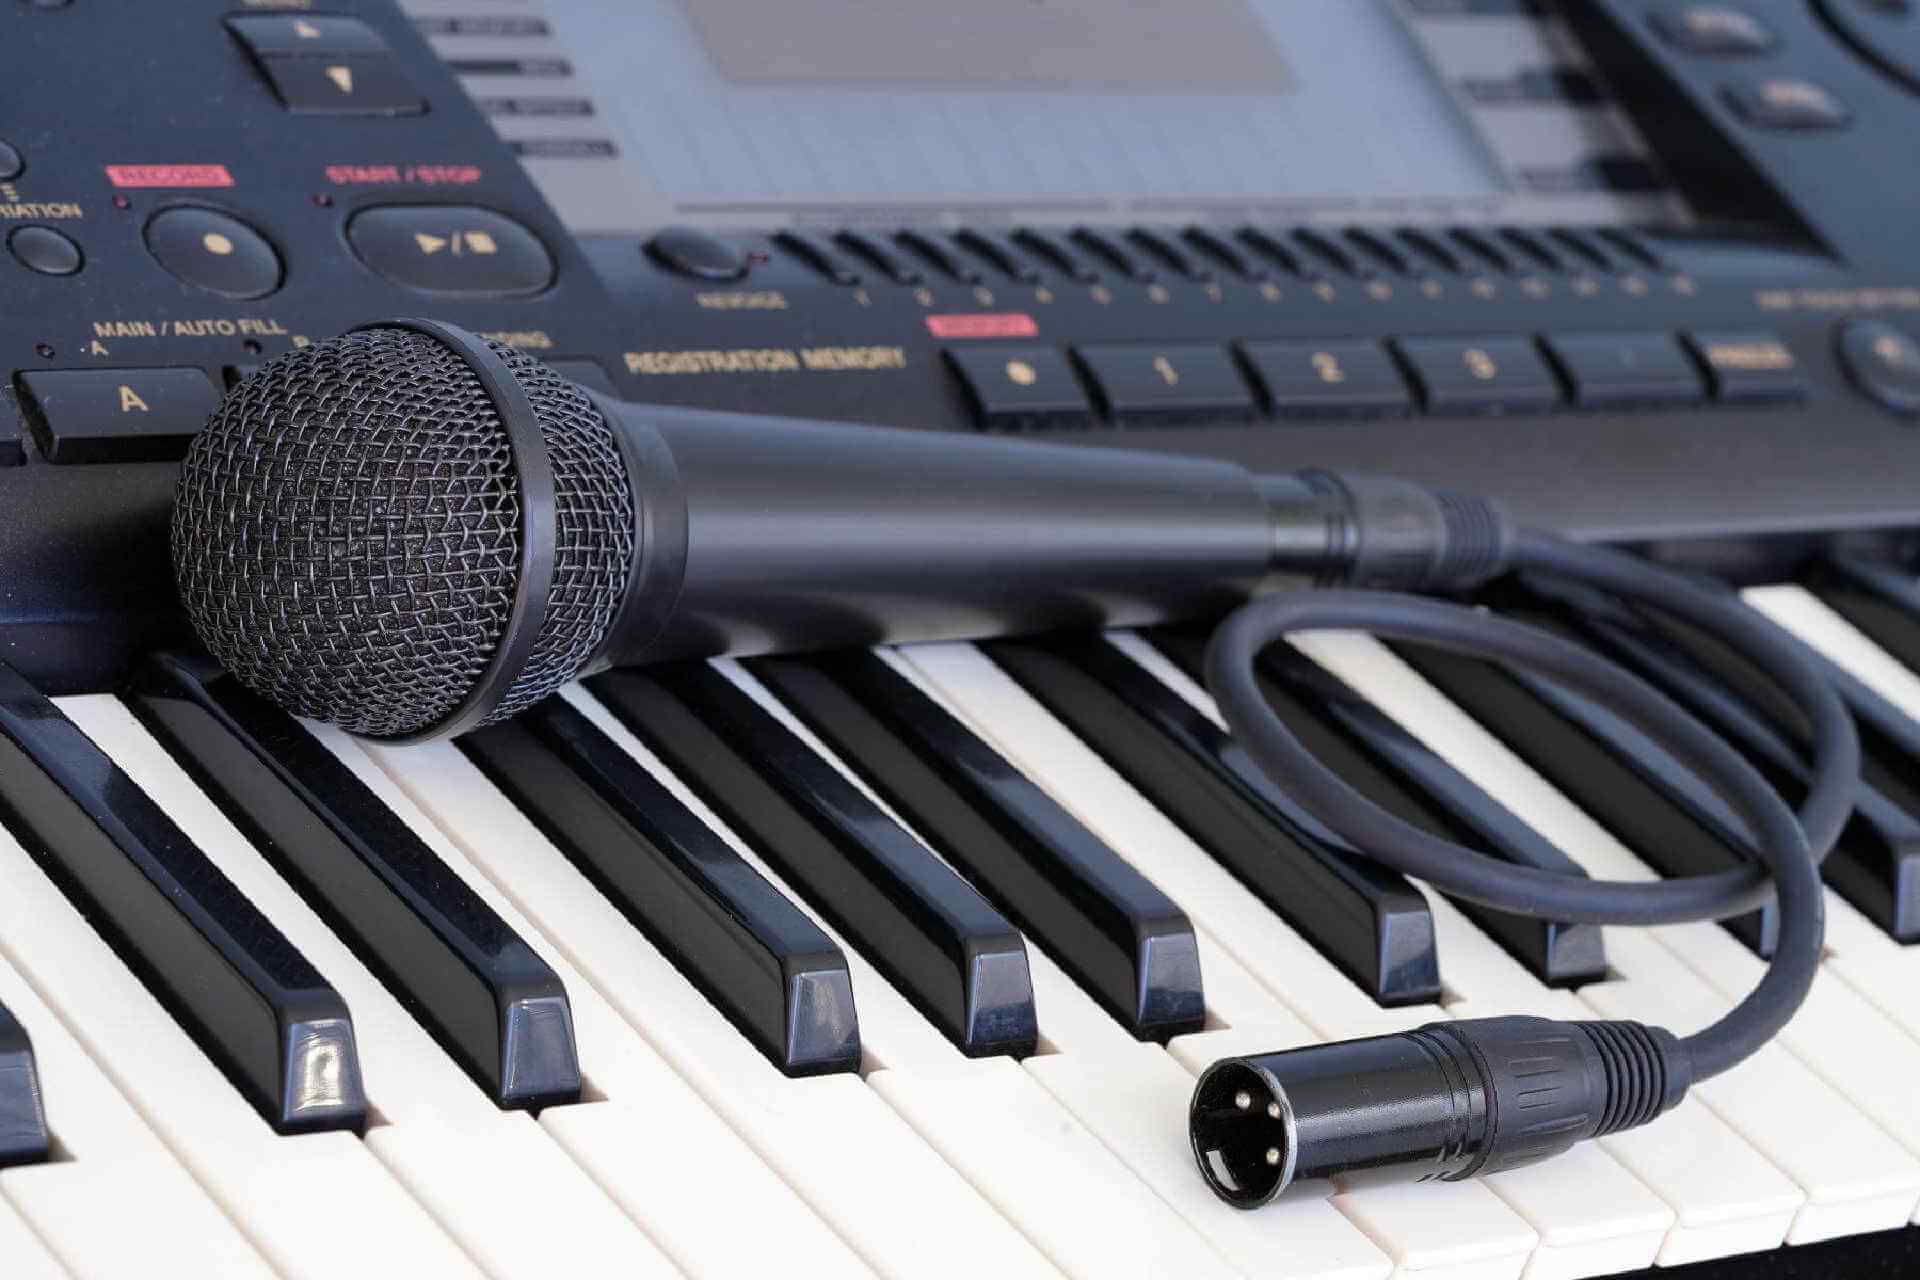 Vocal harmonizer software for PC & Mac